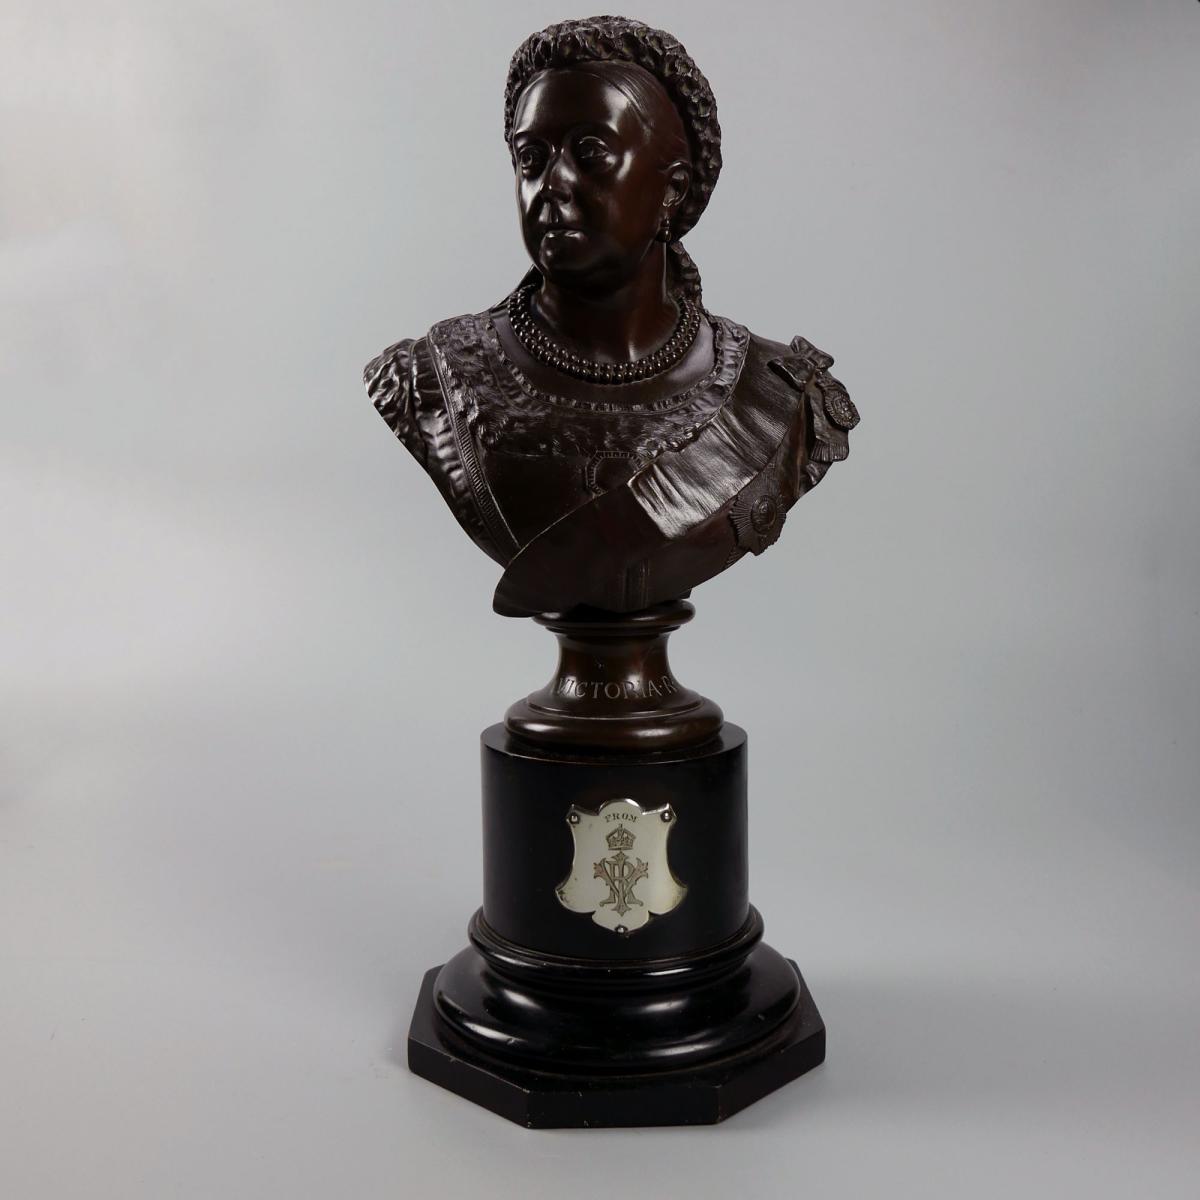 Queen Victoria - A Royal Presentation Diamond Jubilee Bust, 1897